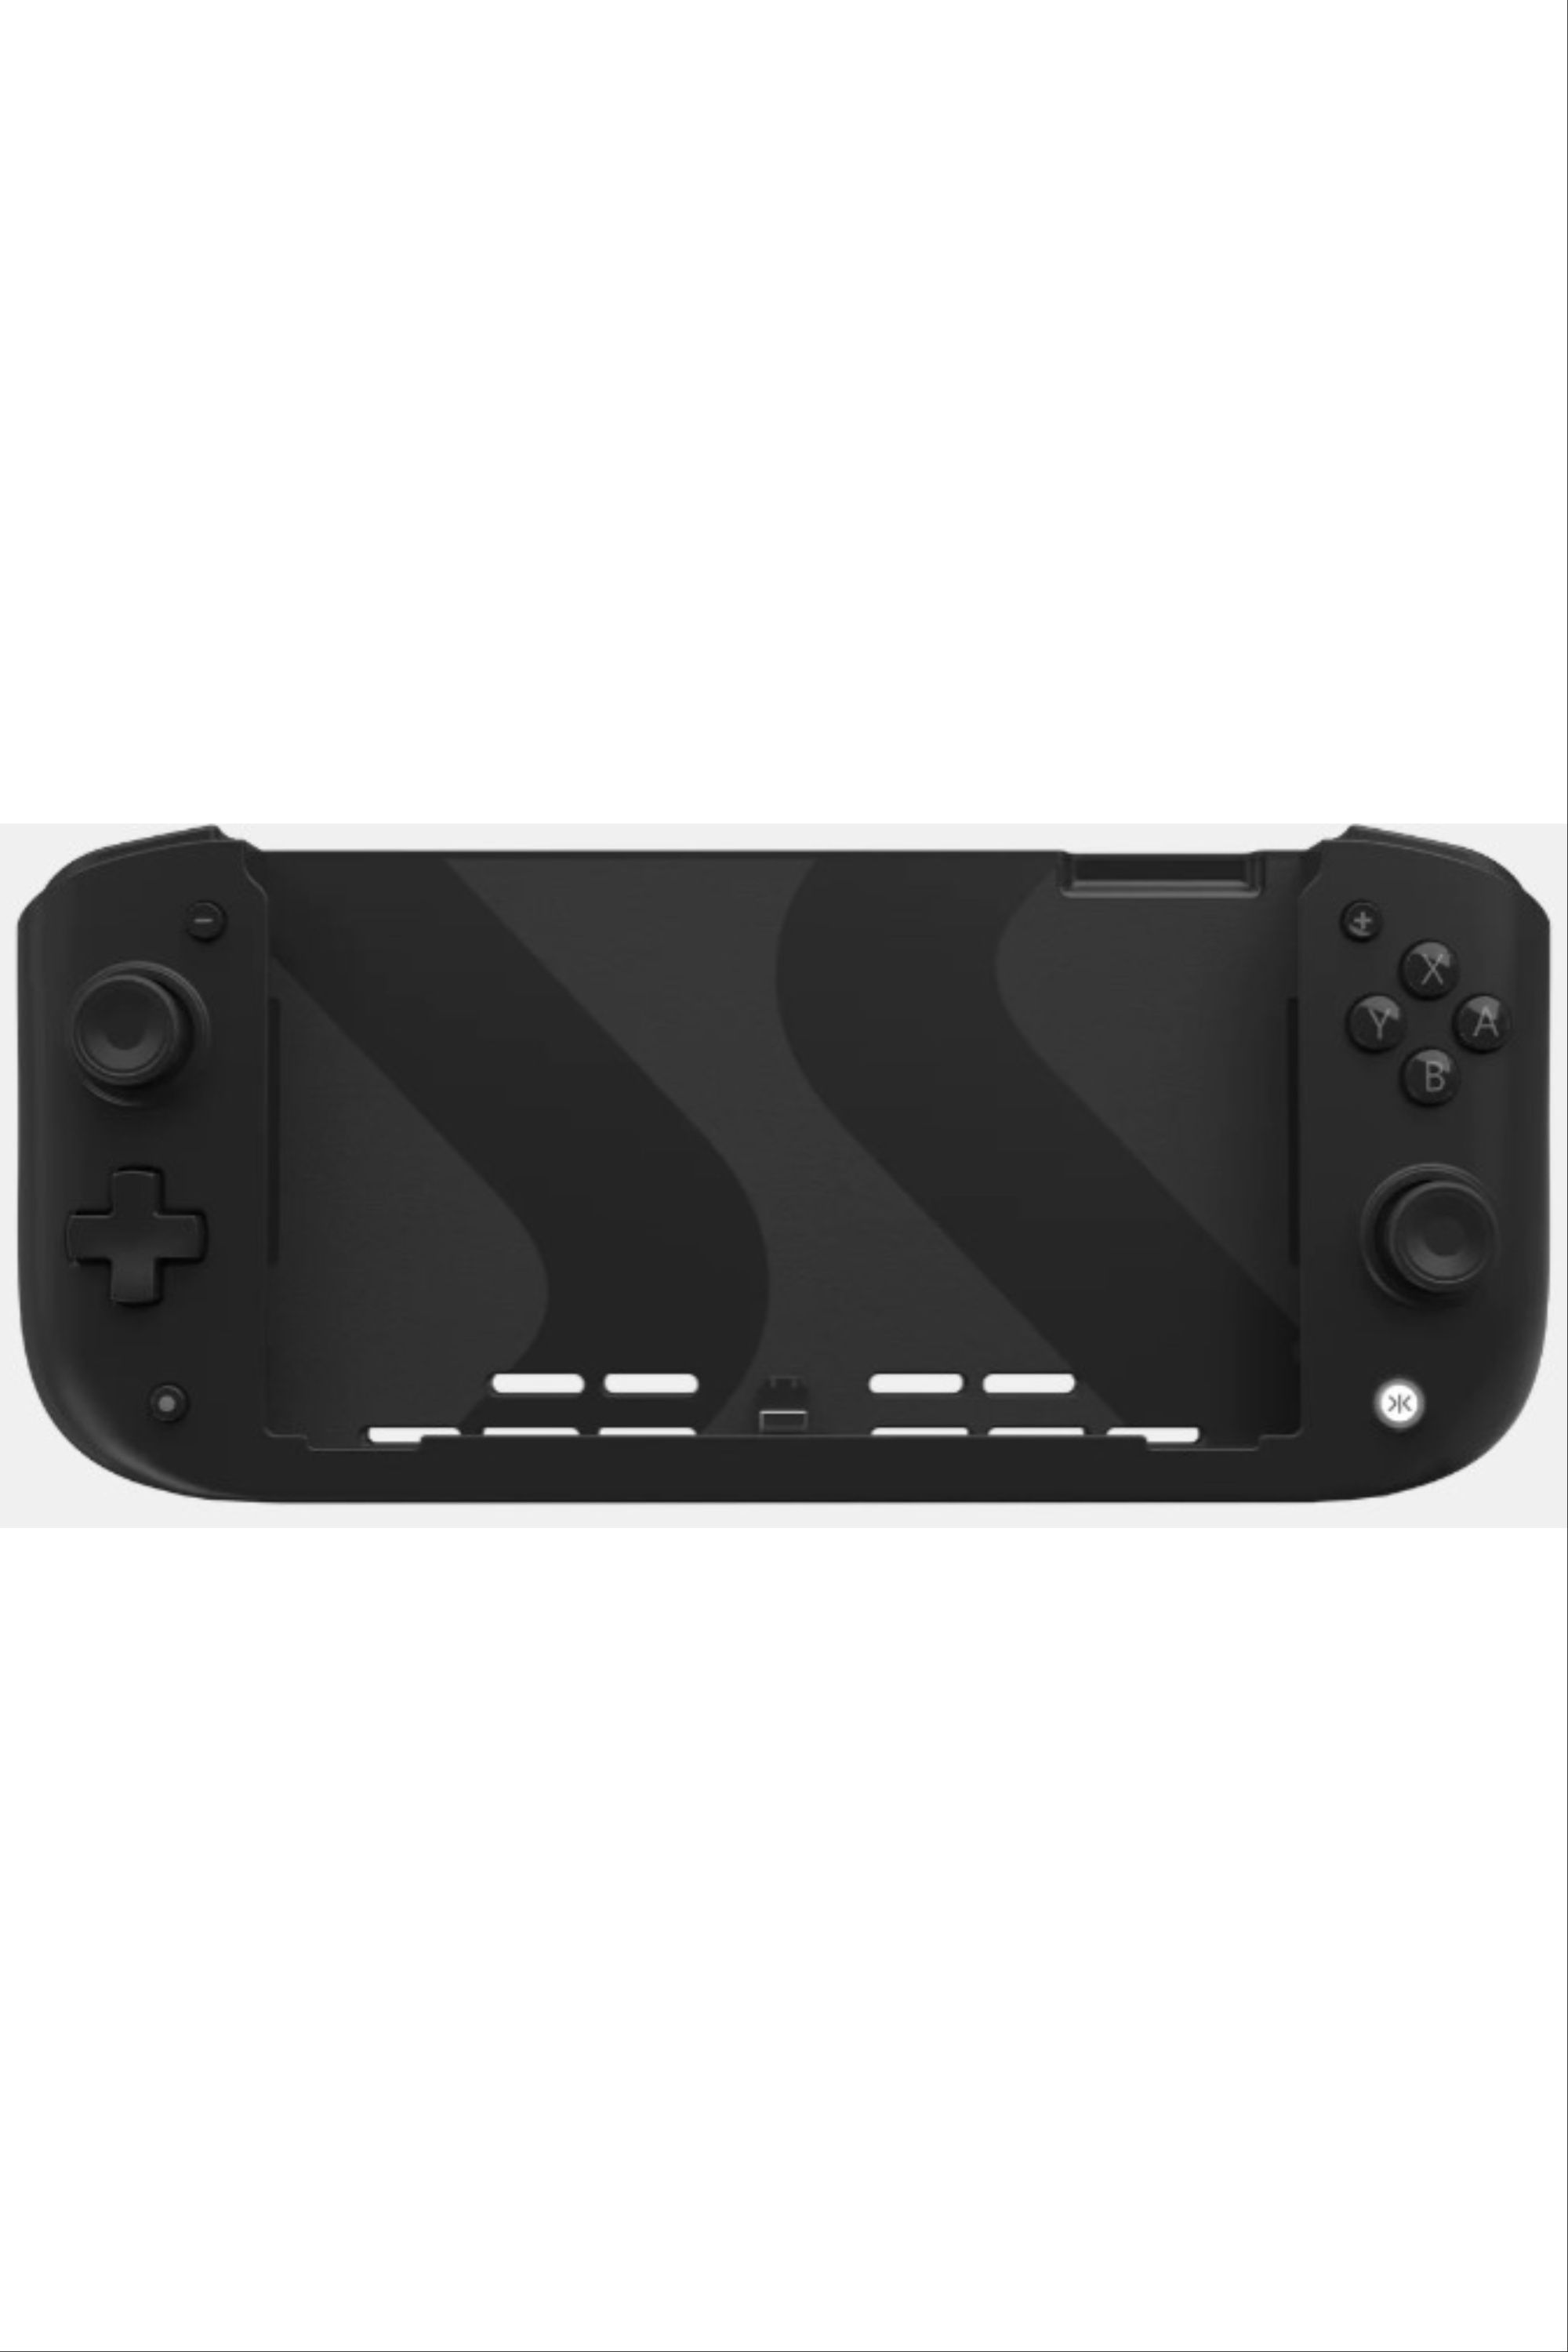 Best Third-Party Nintendo Switch Joy-Con